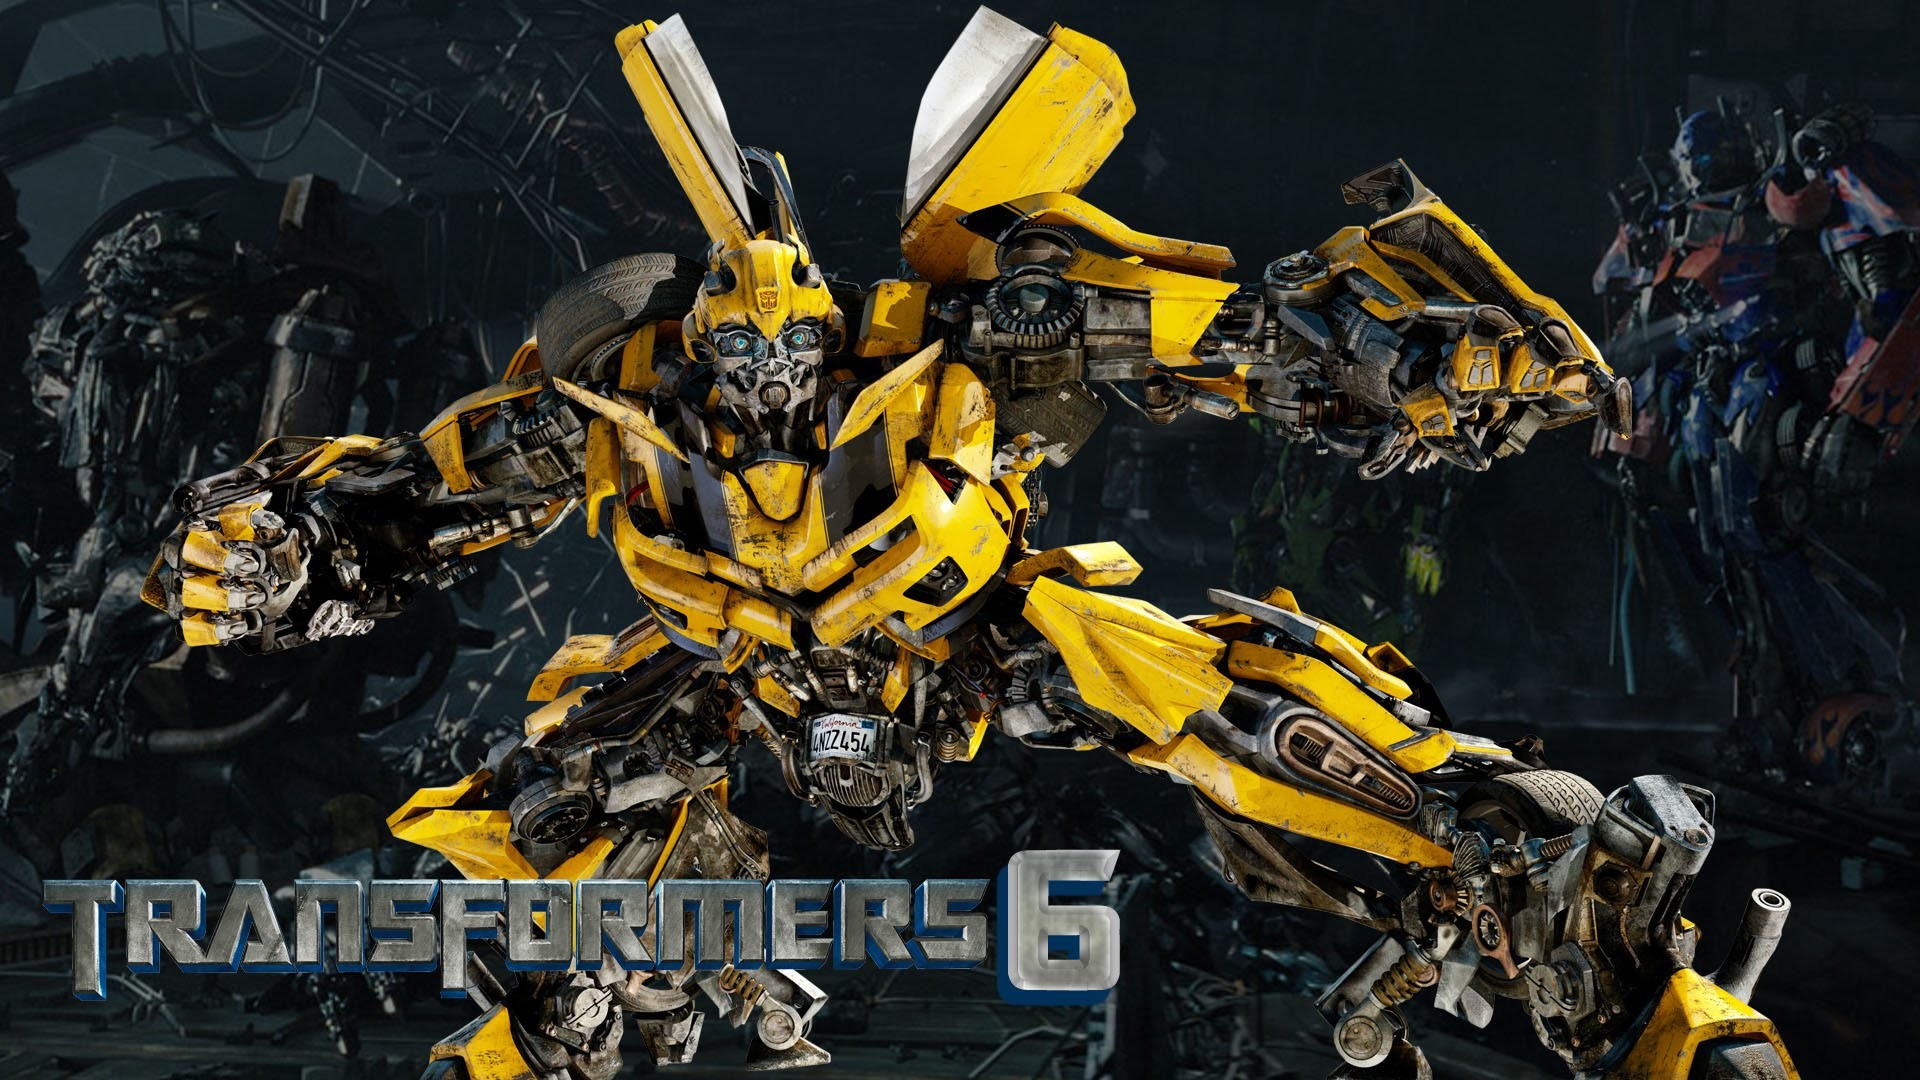 Bumblebee 2018 Wallpaper Hd 66 Images - Bumblebee Movie Transformers 6 -  1920x1080 Wallpaper 